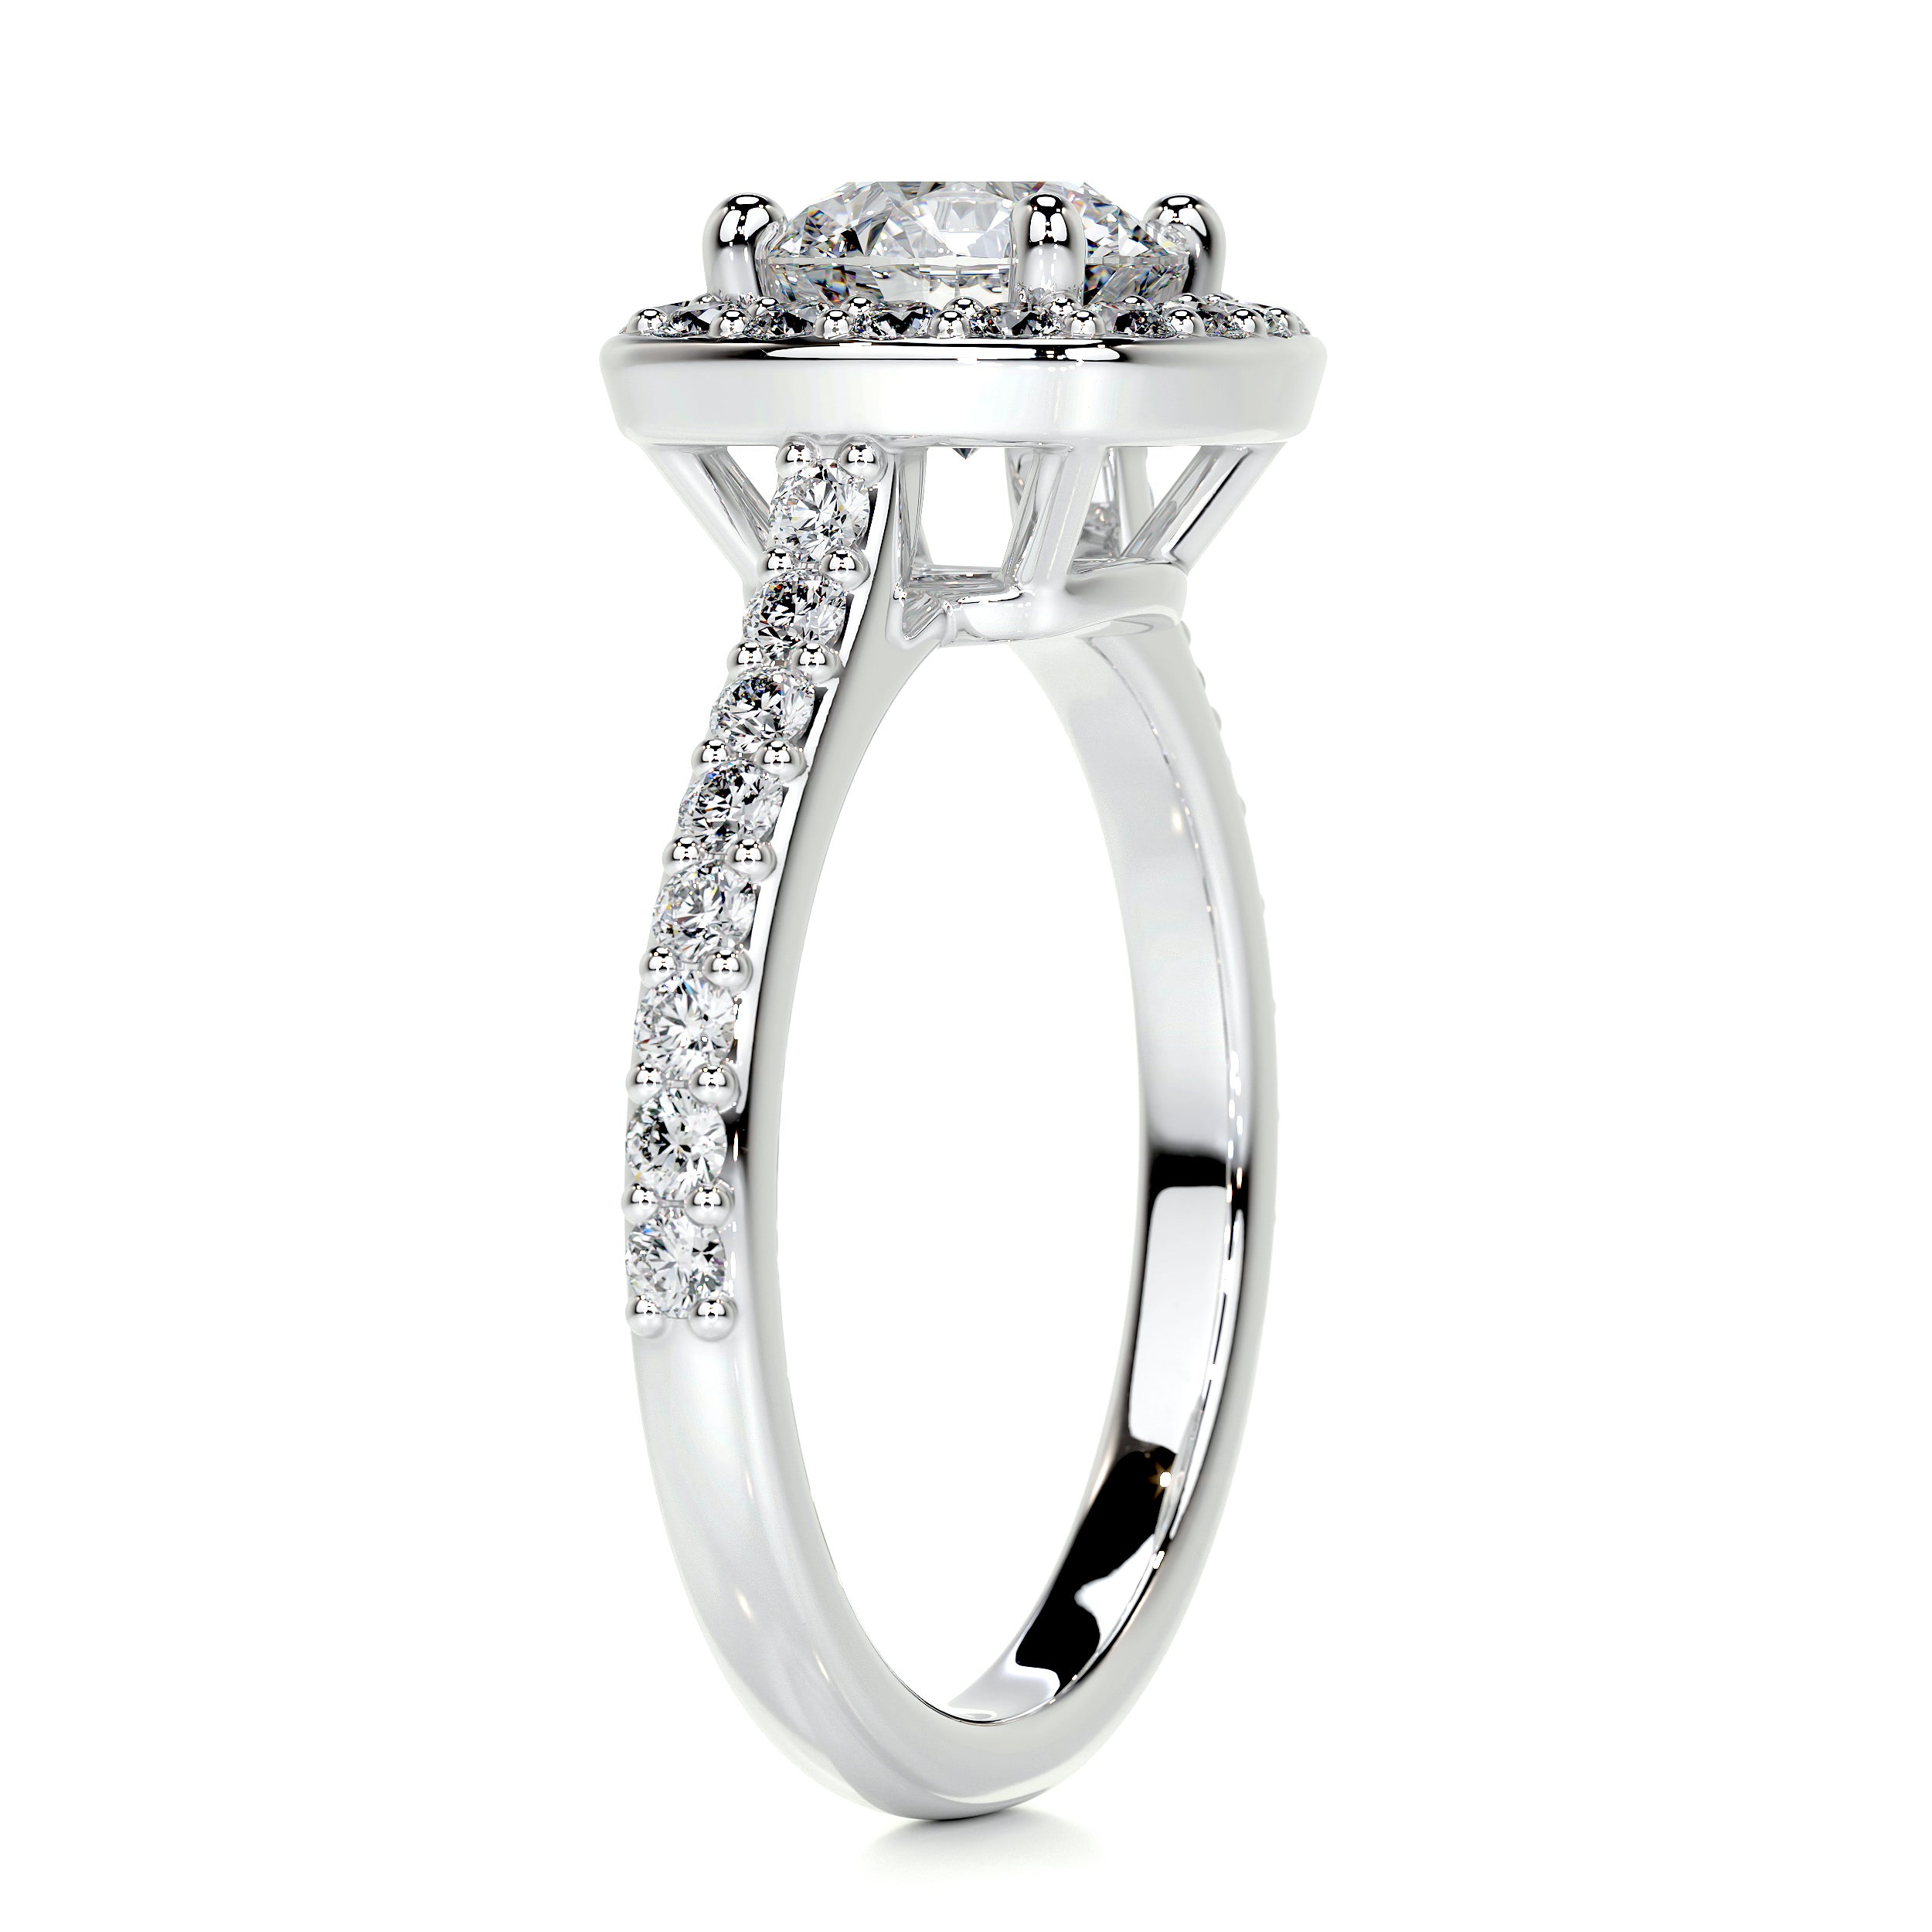 Paisley Diamond Engagement Ring   (2 Carat) -18K White Gold